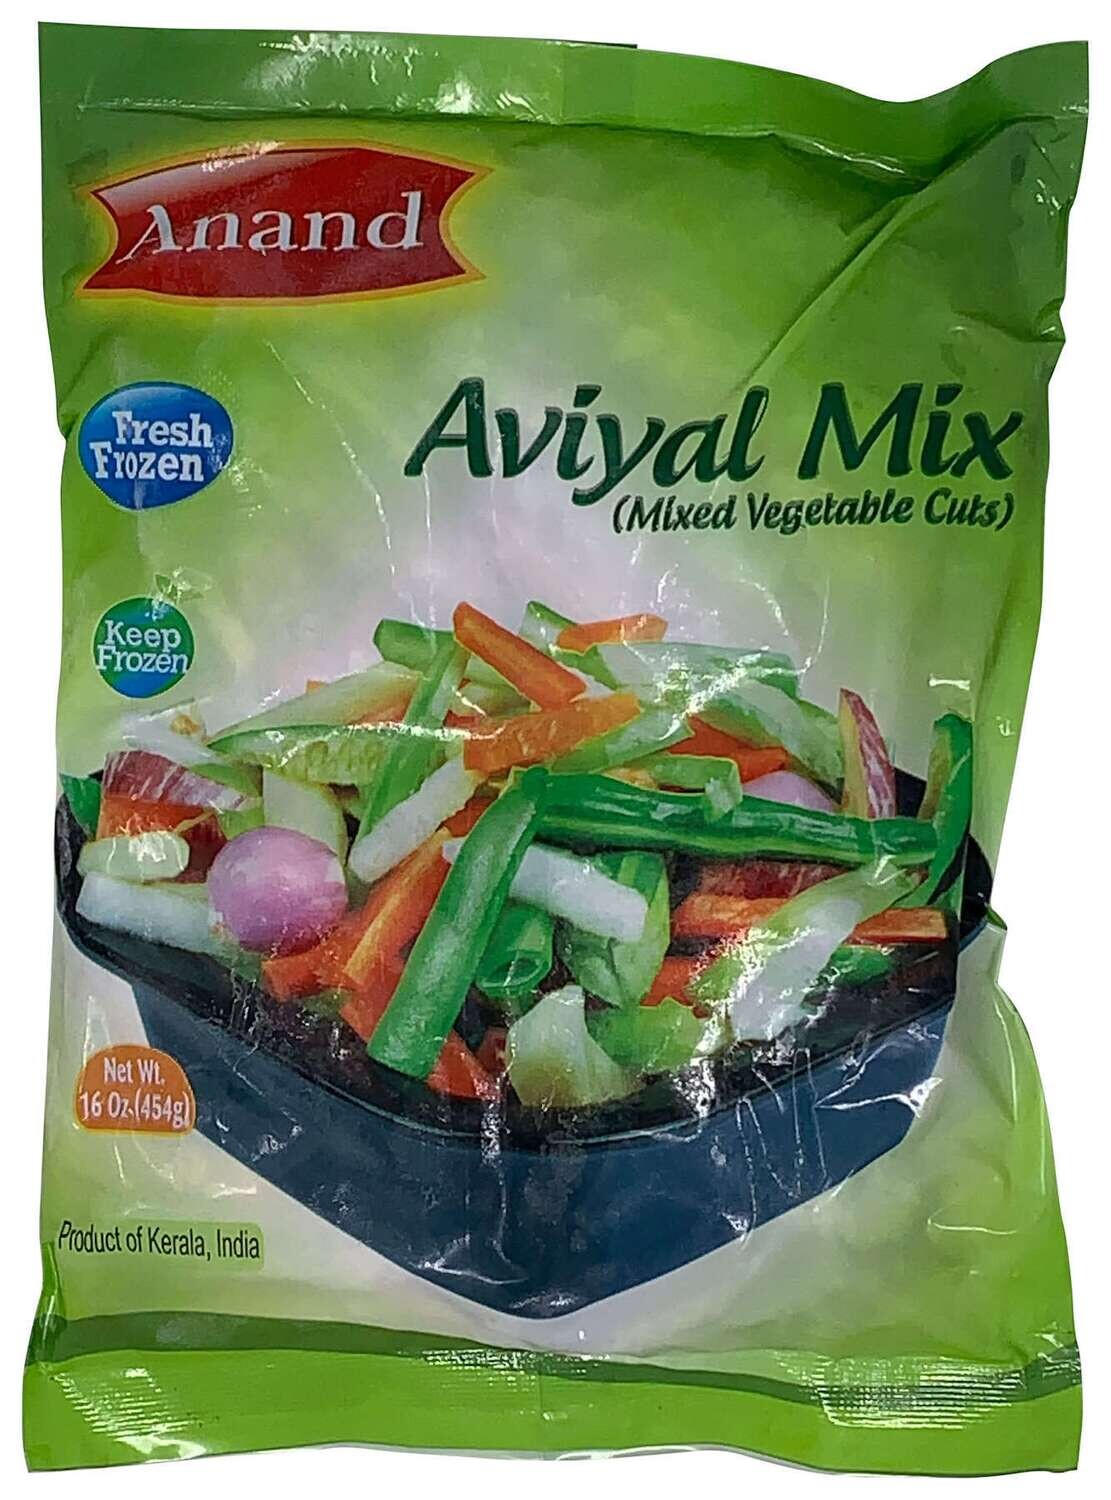 Anand Aviyal Mix (Mixed Vegetables Cut) 454g Frz